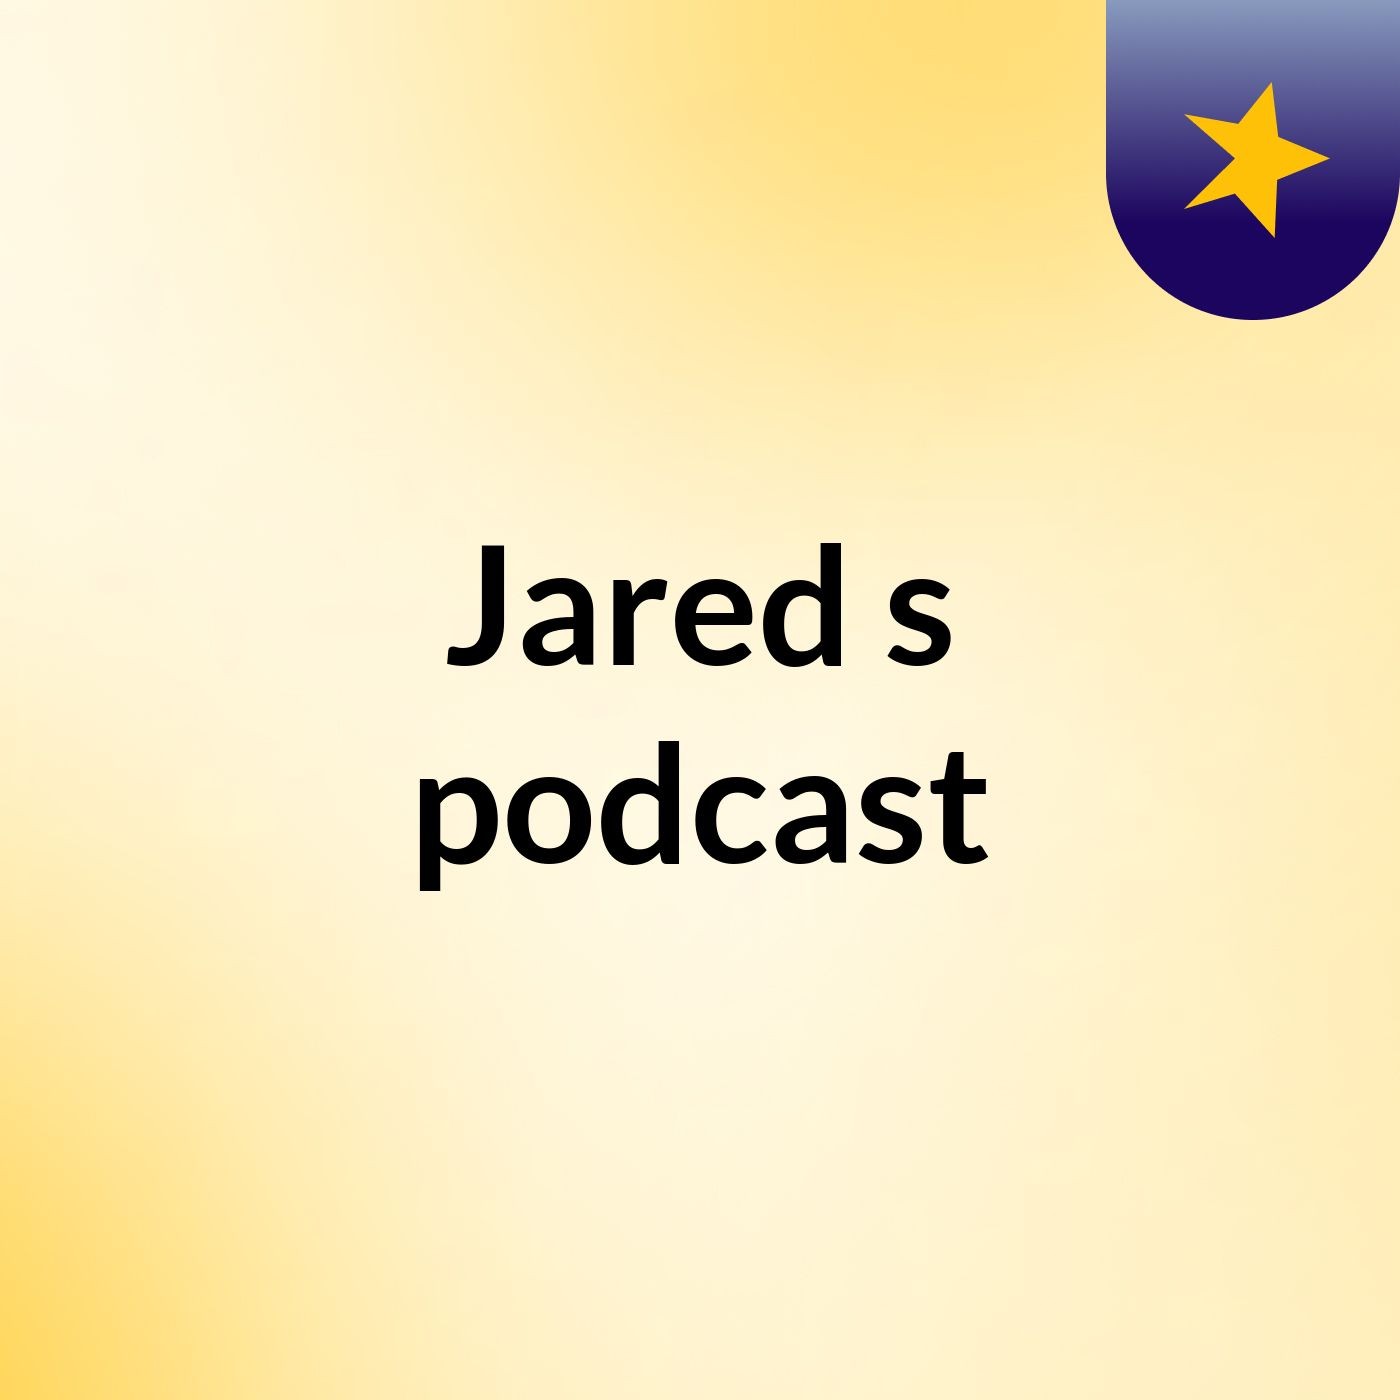 Episode 2 - Jared's podcast